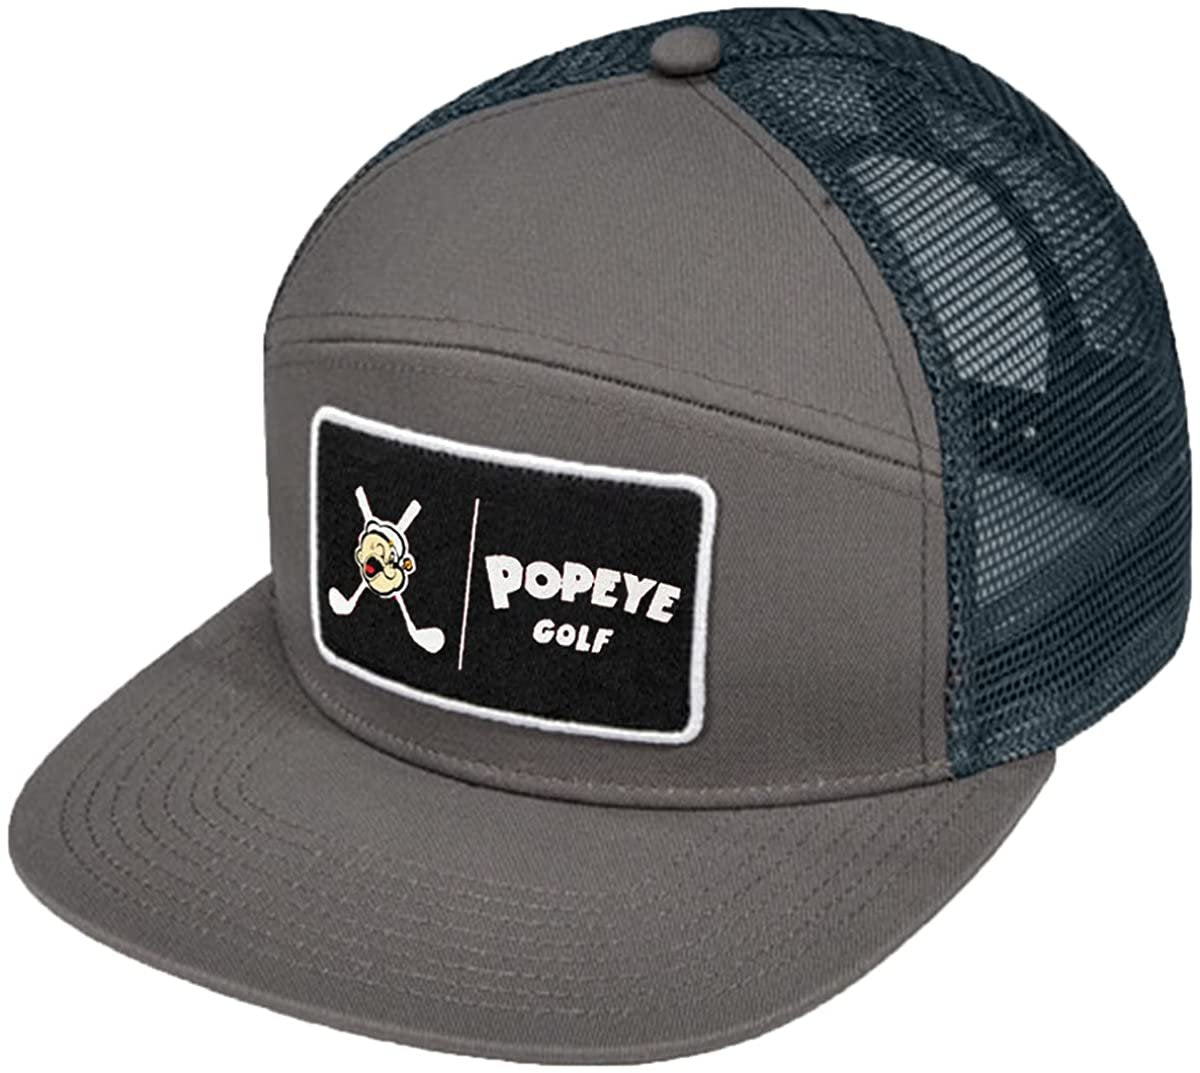 Popeye Golf Tradesman Mesh Adjustable Trucker Hat Snapback